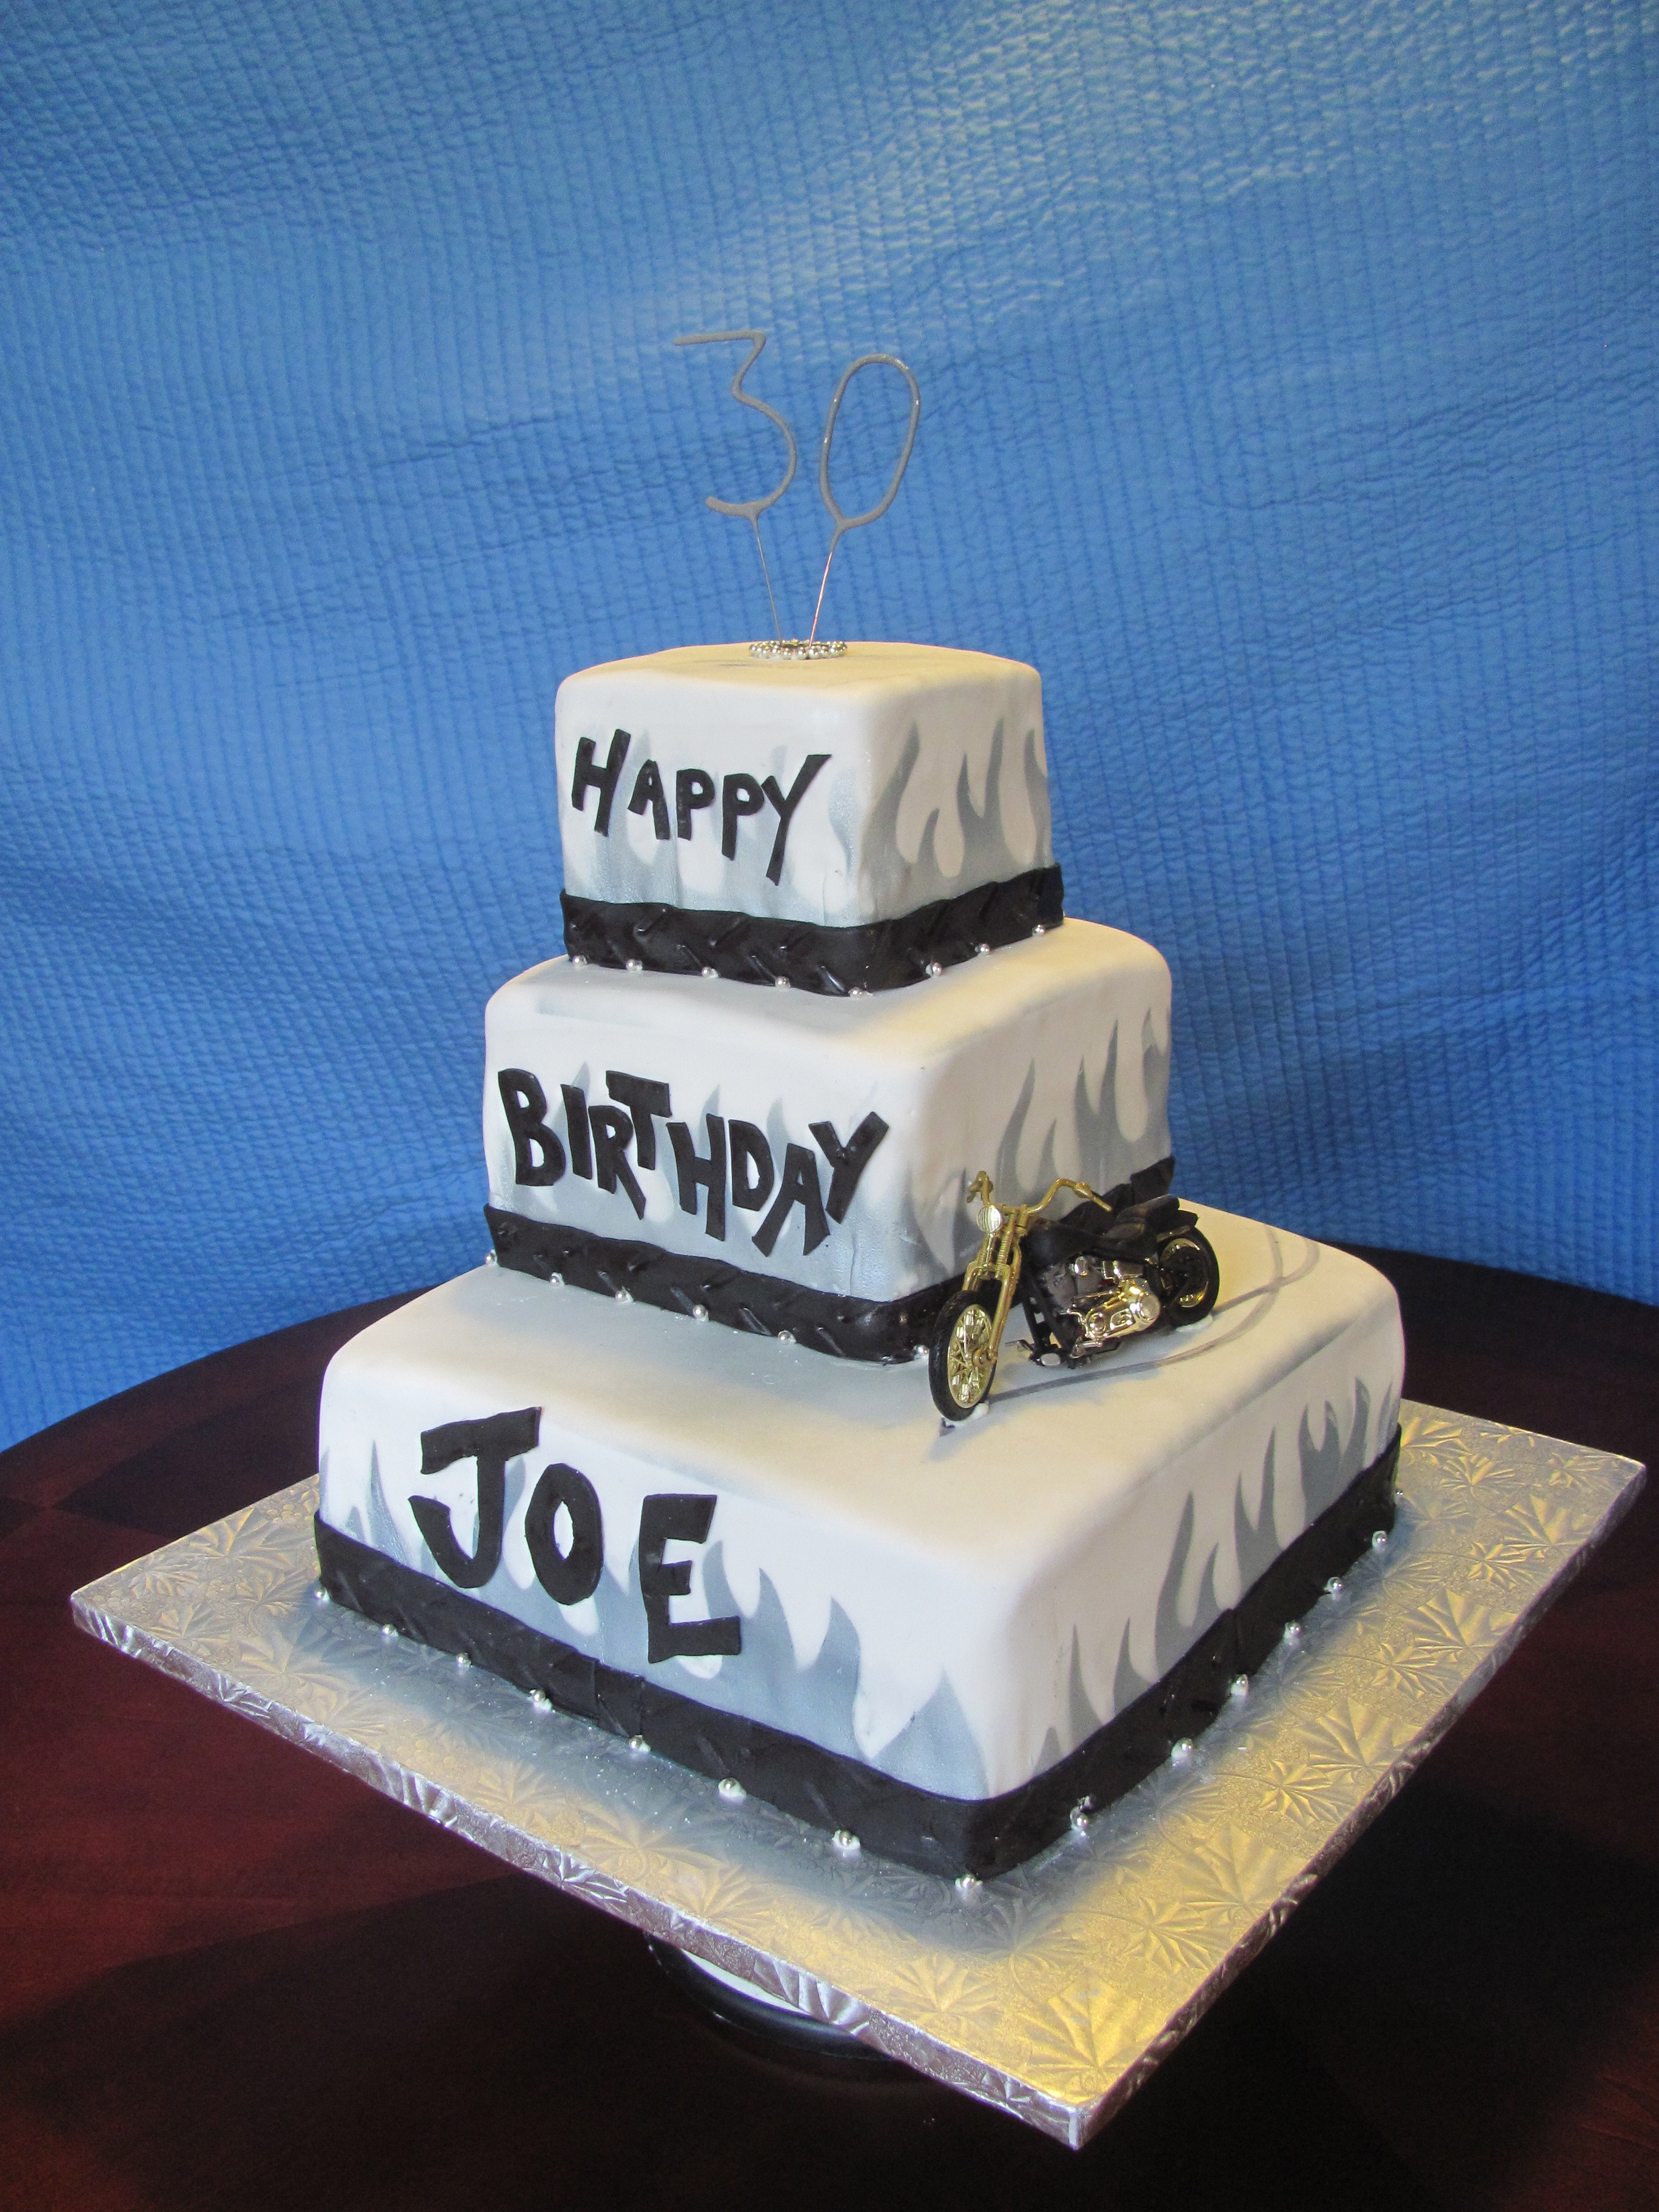 Best ideas about Happy Birthday Joe Cake
. Save or Pin Happy Birthday Joe Now.